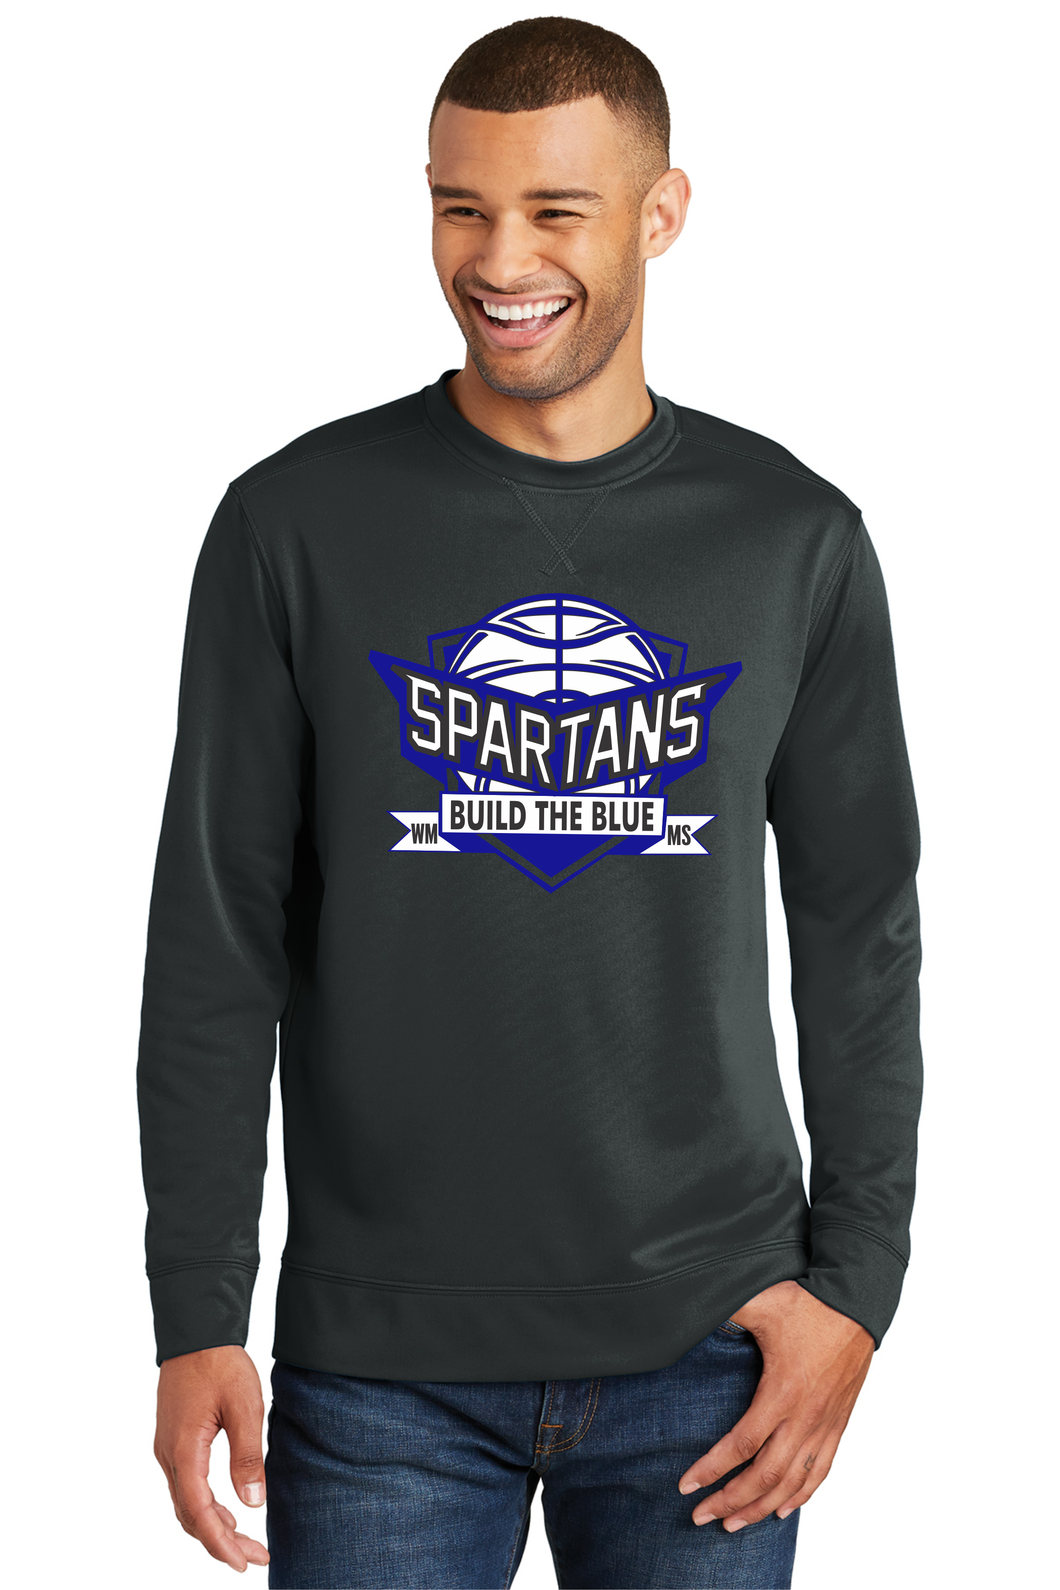 West McDowell Spartan Black Crewneck Sweatshirt